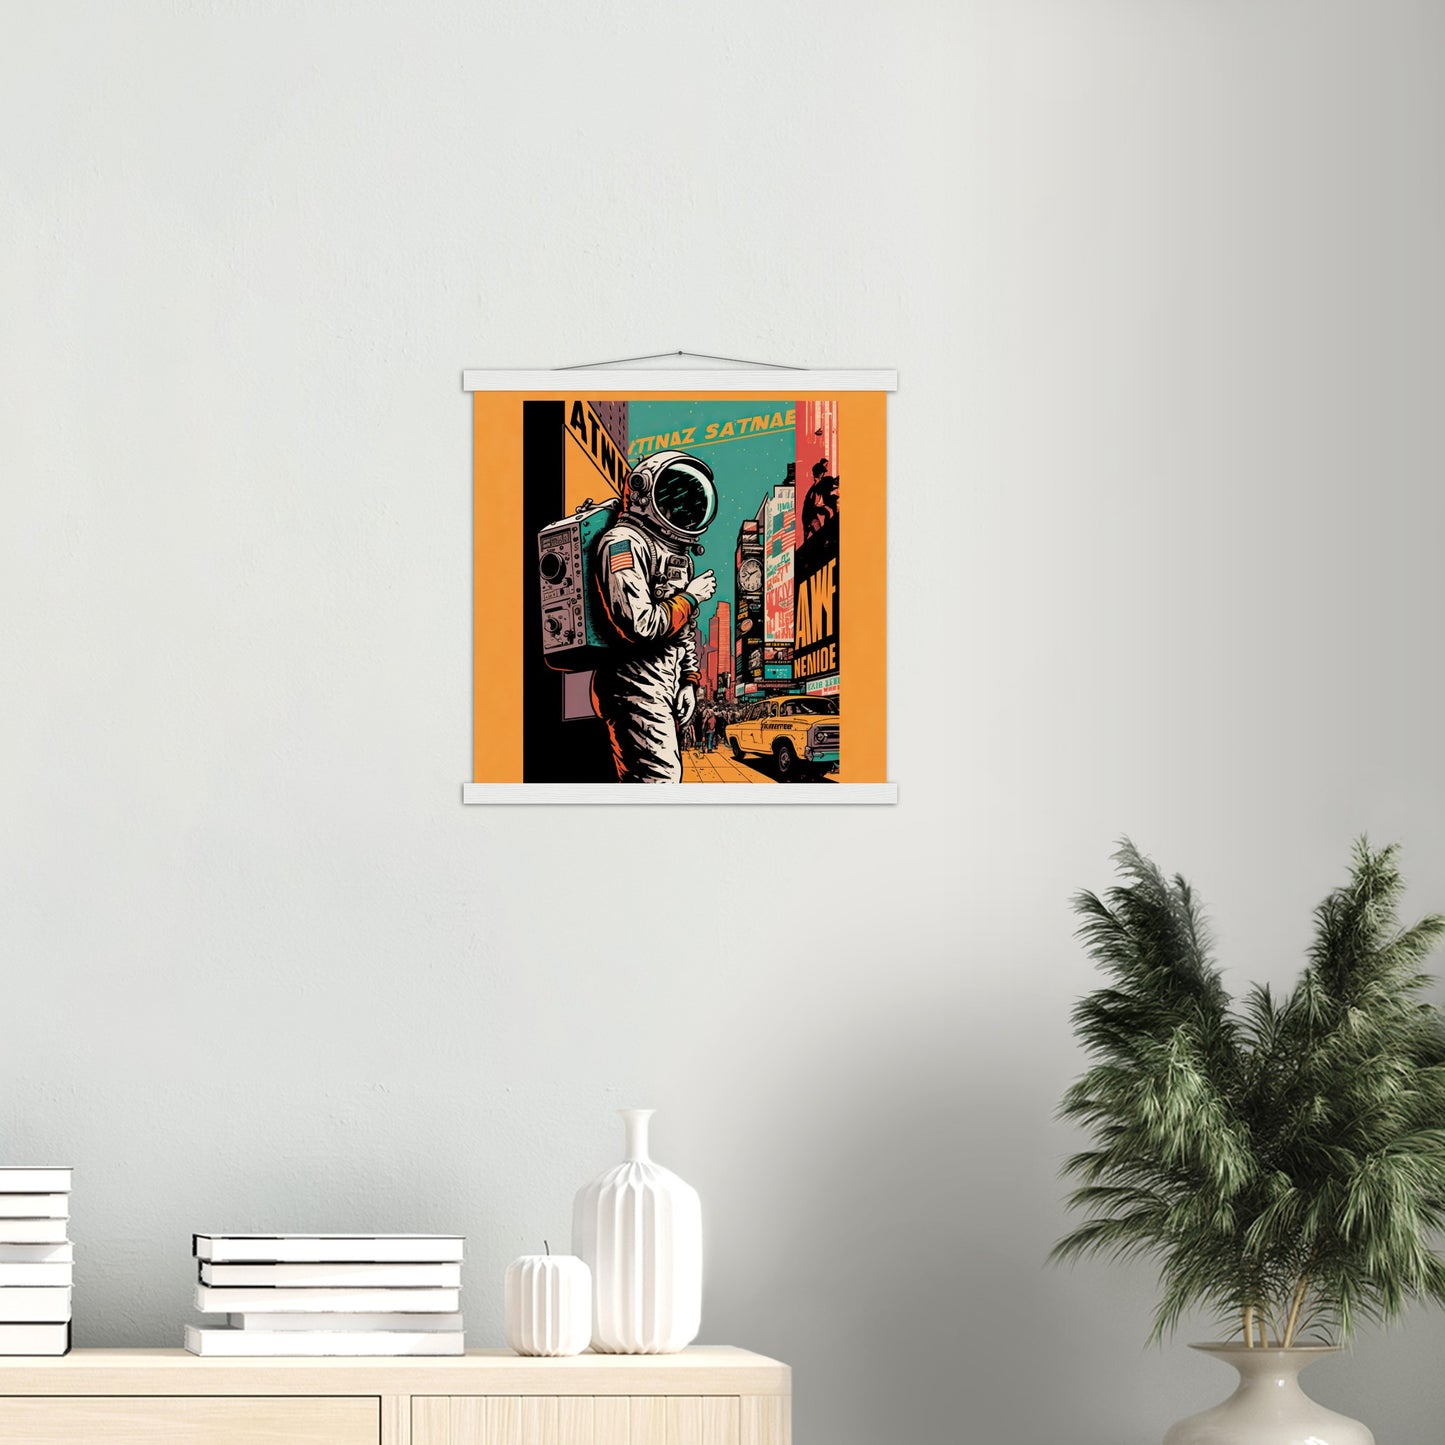 Poster mit Leisten (Holz) in Museumsqualität - Astronaut at the NY Time Square - Illustration - Astronaut - New York - Rocketman - Posterleisten - USA - Fineart - Posterrahmen  - Wandkunst - Holzrahmen - Poster with frame - artwork - art brand - printed cup personalized - Holzleisten - pixelboys - Kunstdrucke - wandbilder - wall art - Kunst auf Tassen  - Office Poster - Gastrotassen - Wanddekoration - Acrylkunst - Geschenkidee - Office Poster - Acryldruck - Abstrakte Kunst -